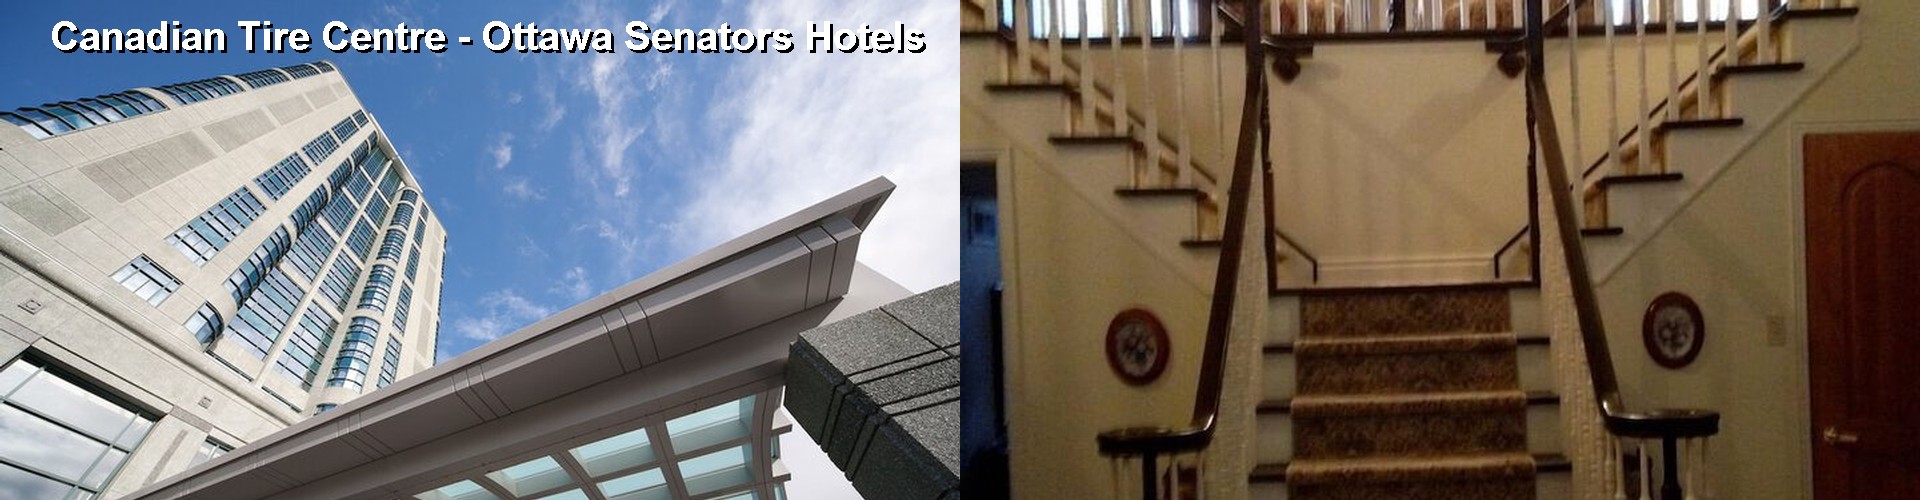 5 Best Hotels near Canadian Tire Centre - Ottawa Senators